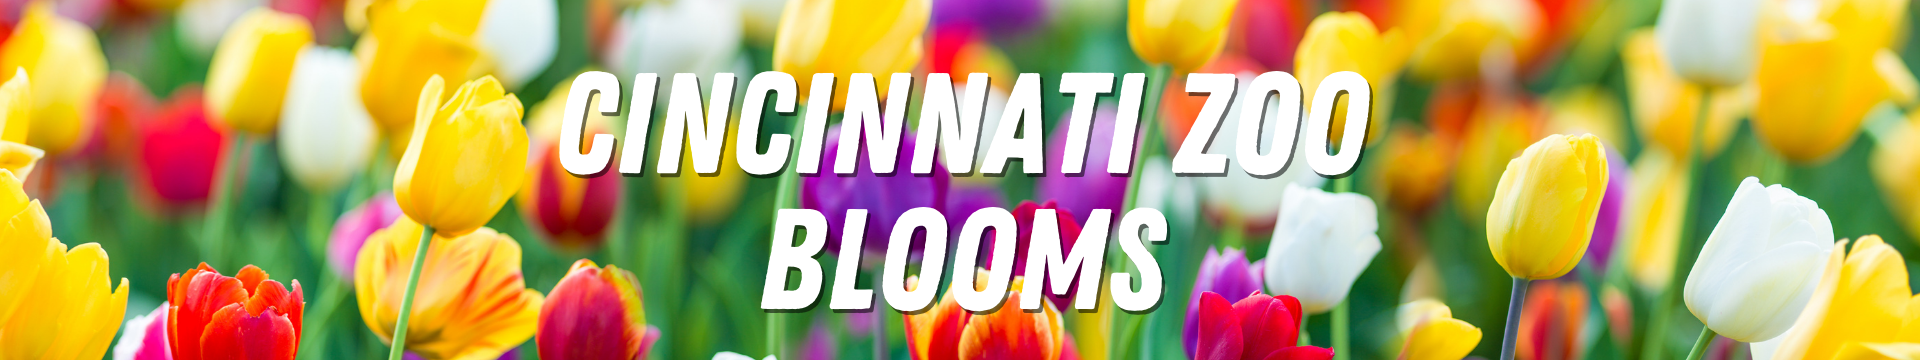 Cincinnati Zoo Blooms